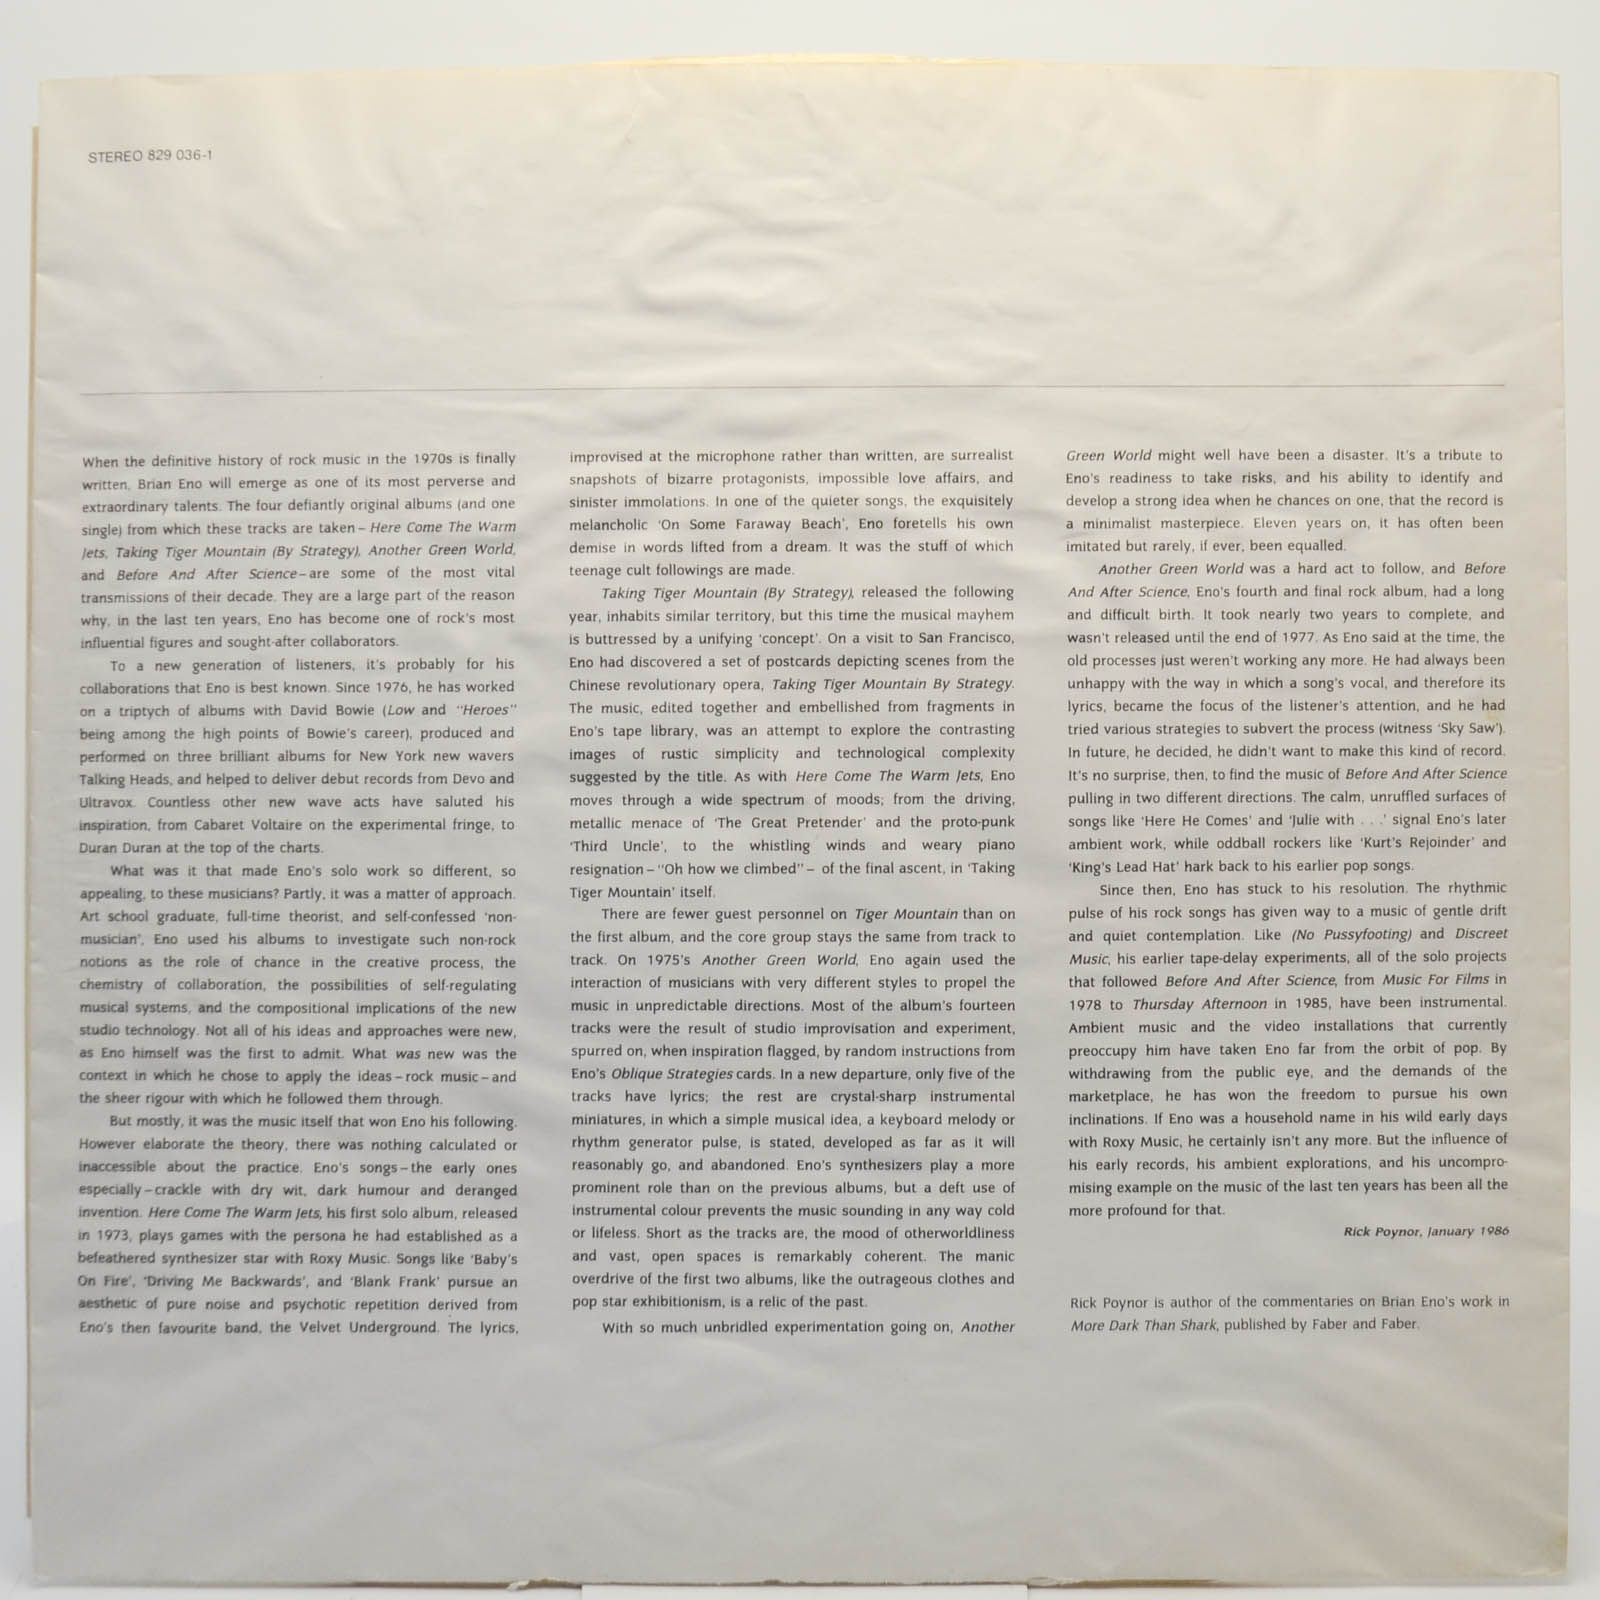 Eno — More Blank Than Frank, 1986